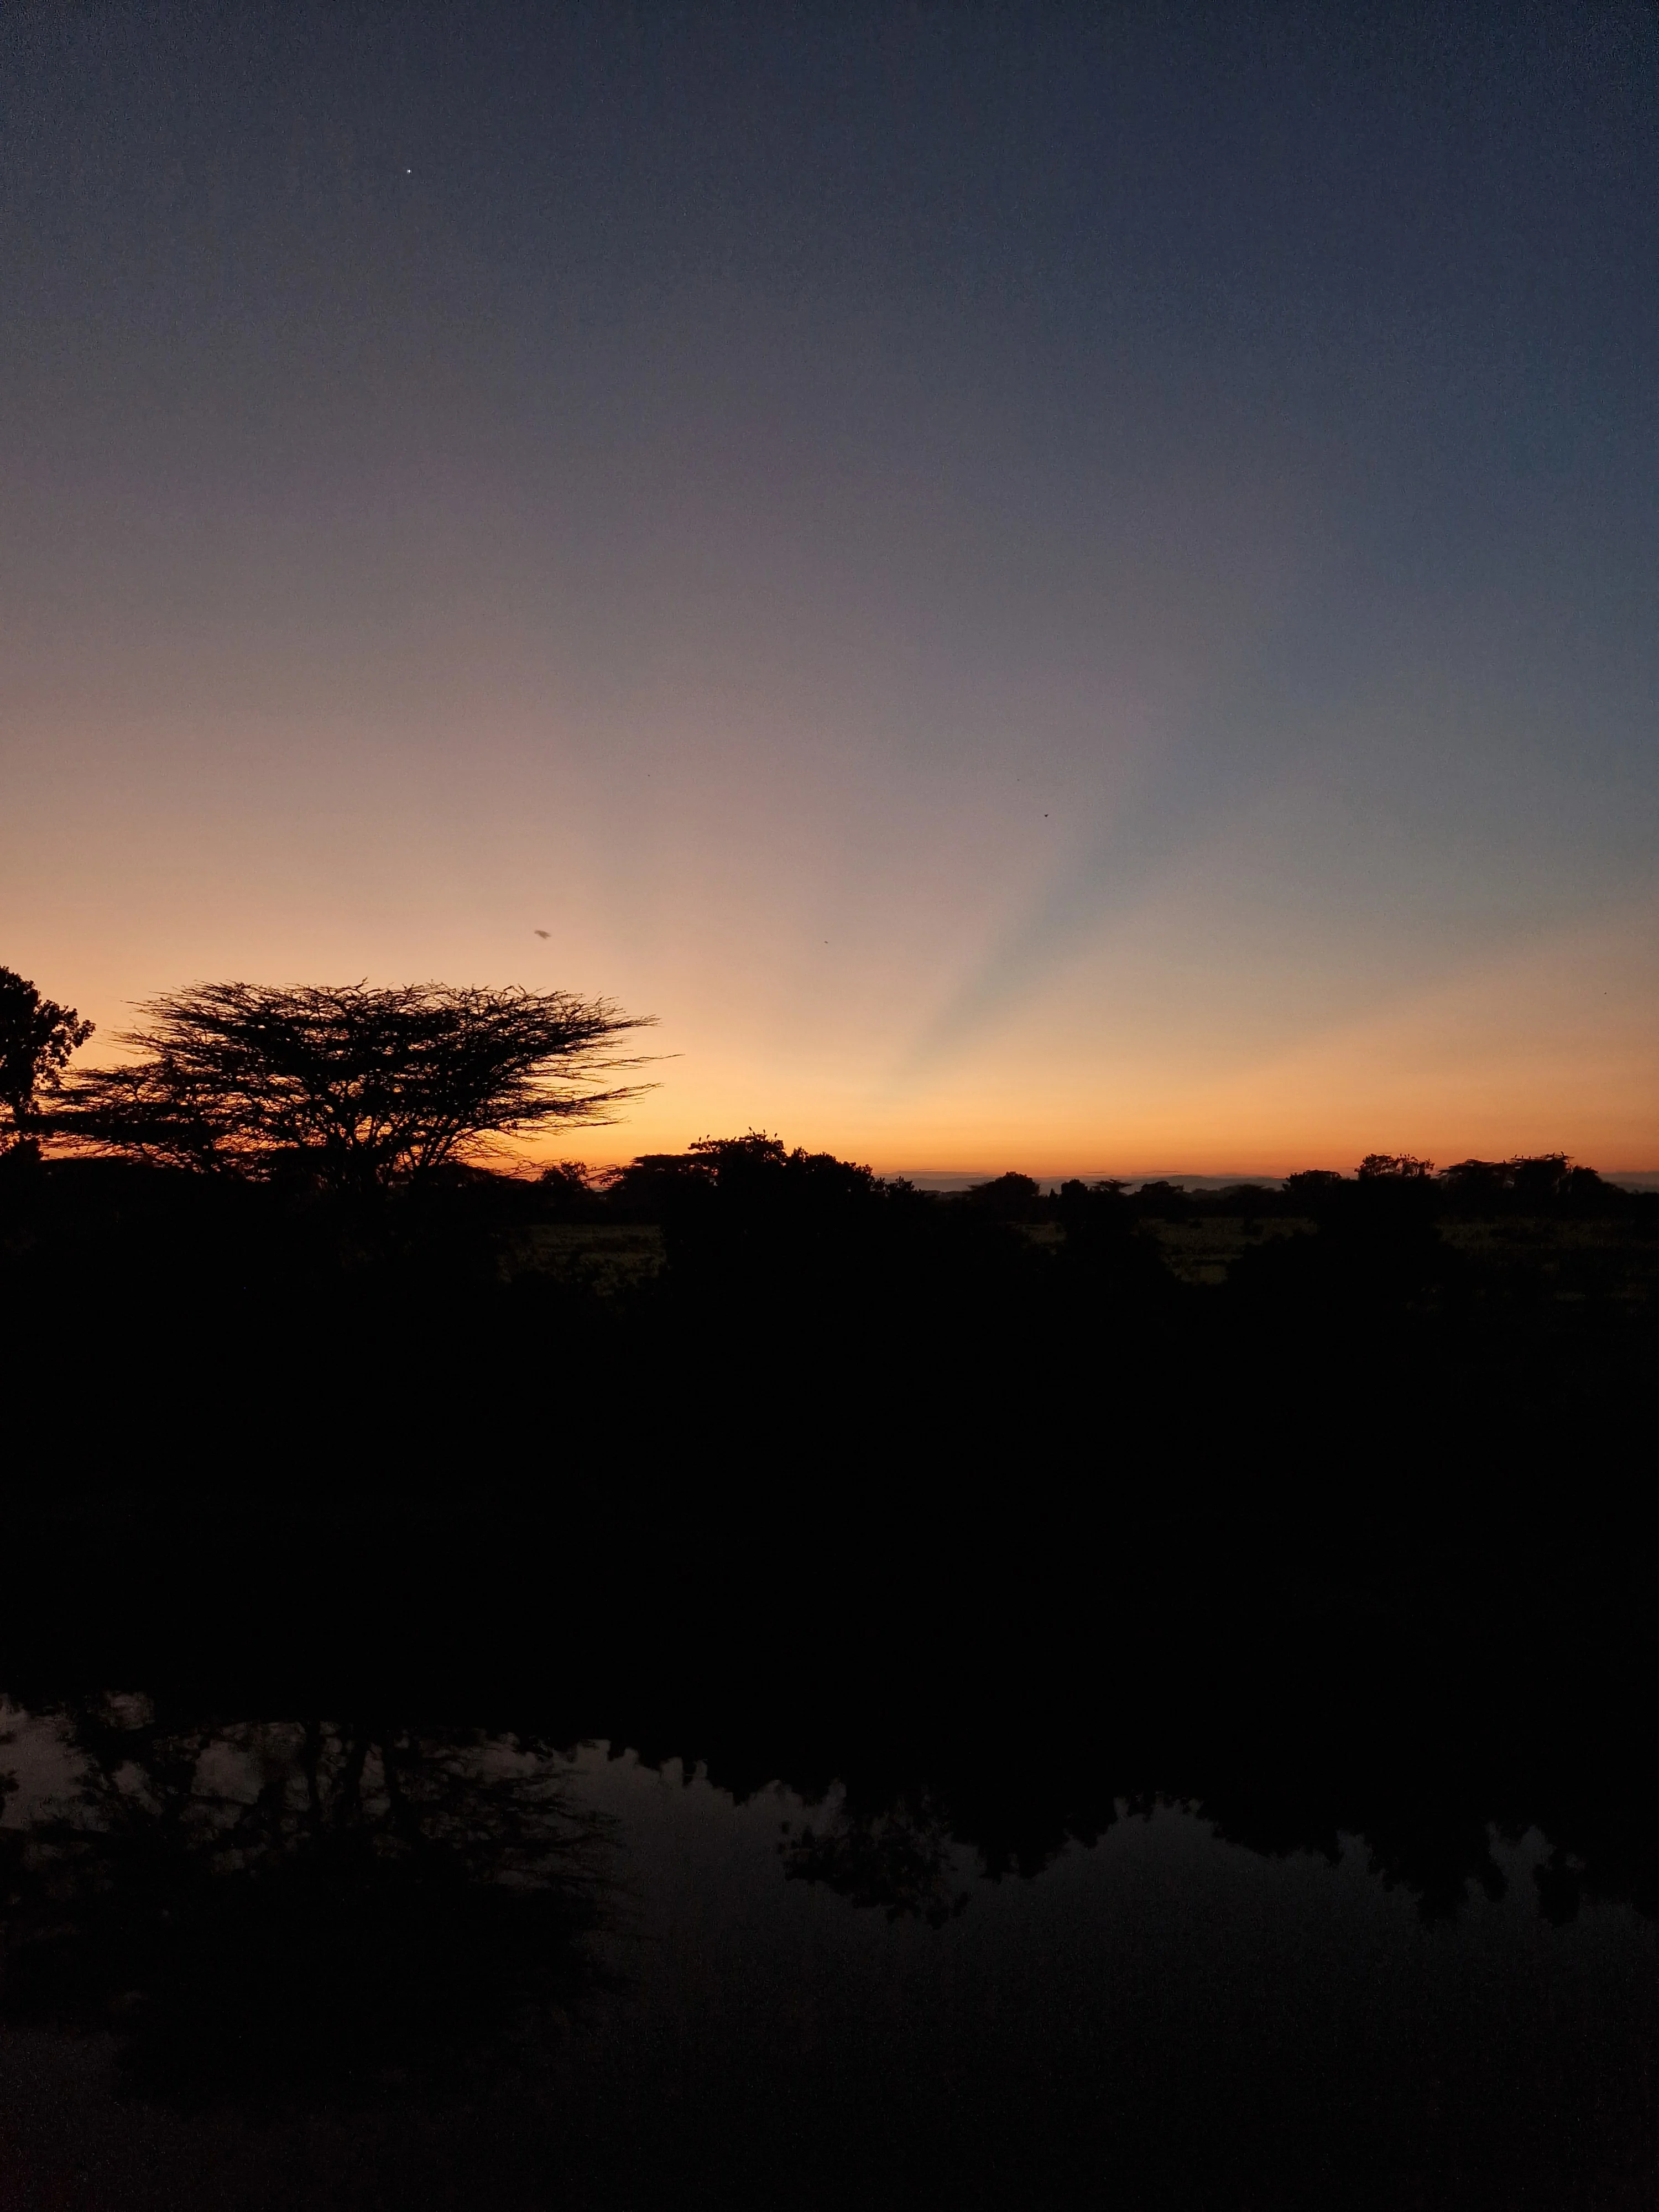 Sunrise at Crocodile Camp over Masai Mara